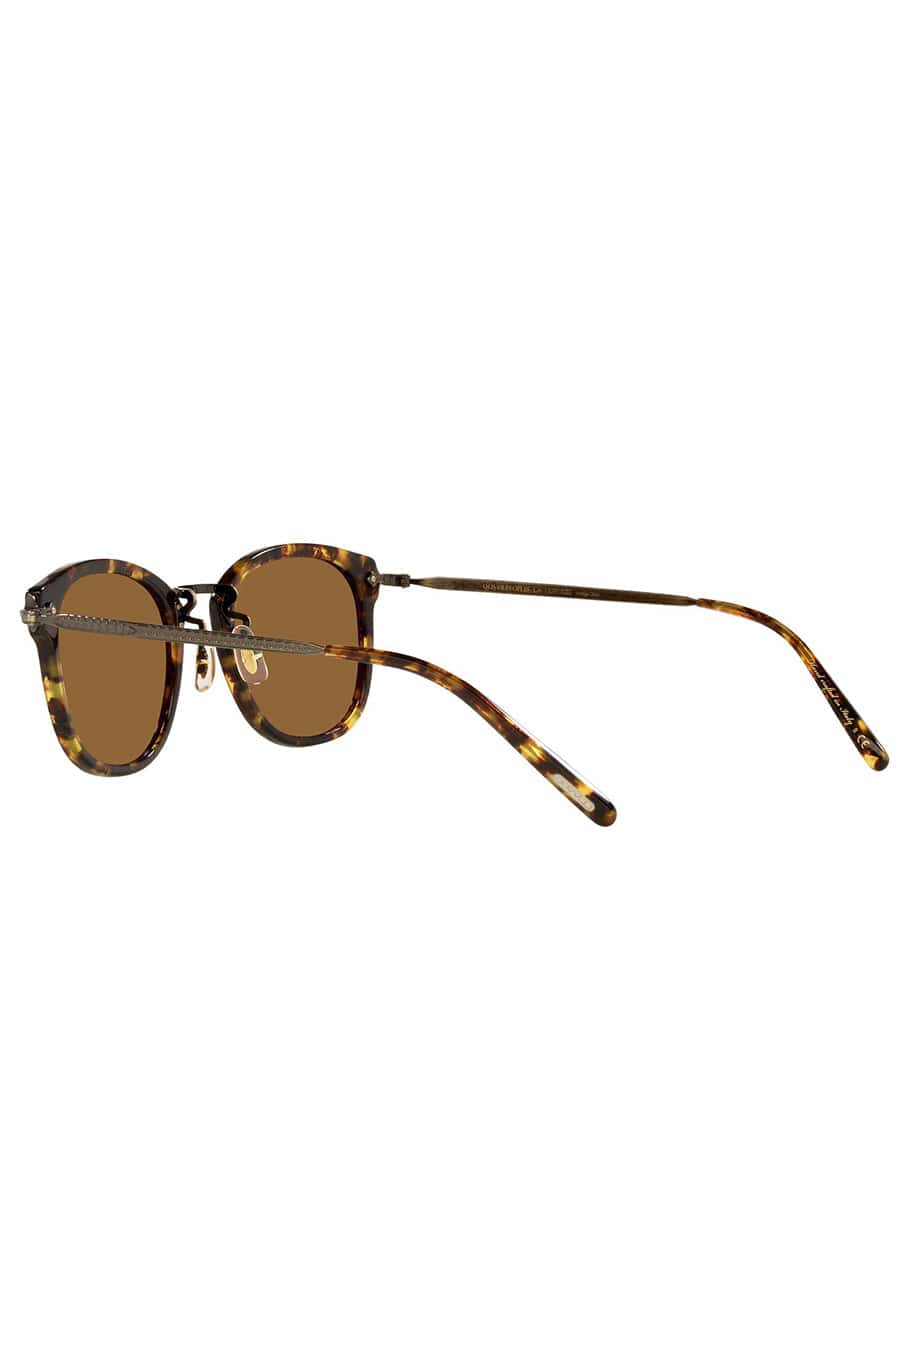 Op-506 Sunglasses ACCESSORIESUNGLASSES OLIVER PEOPLES   